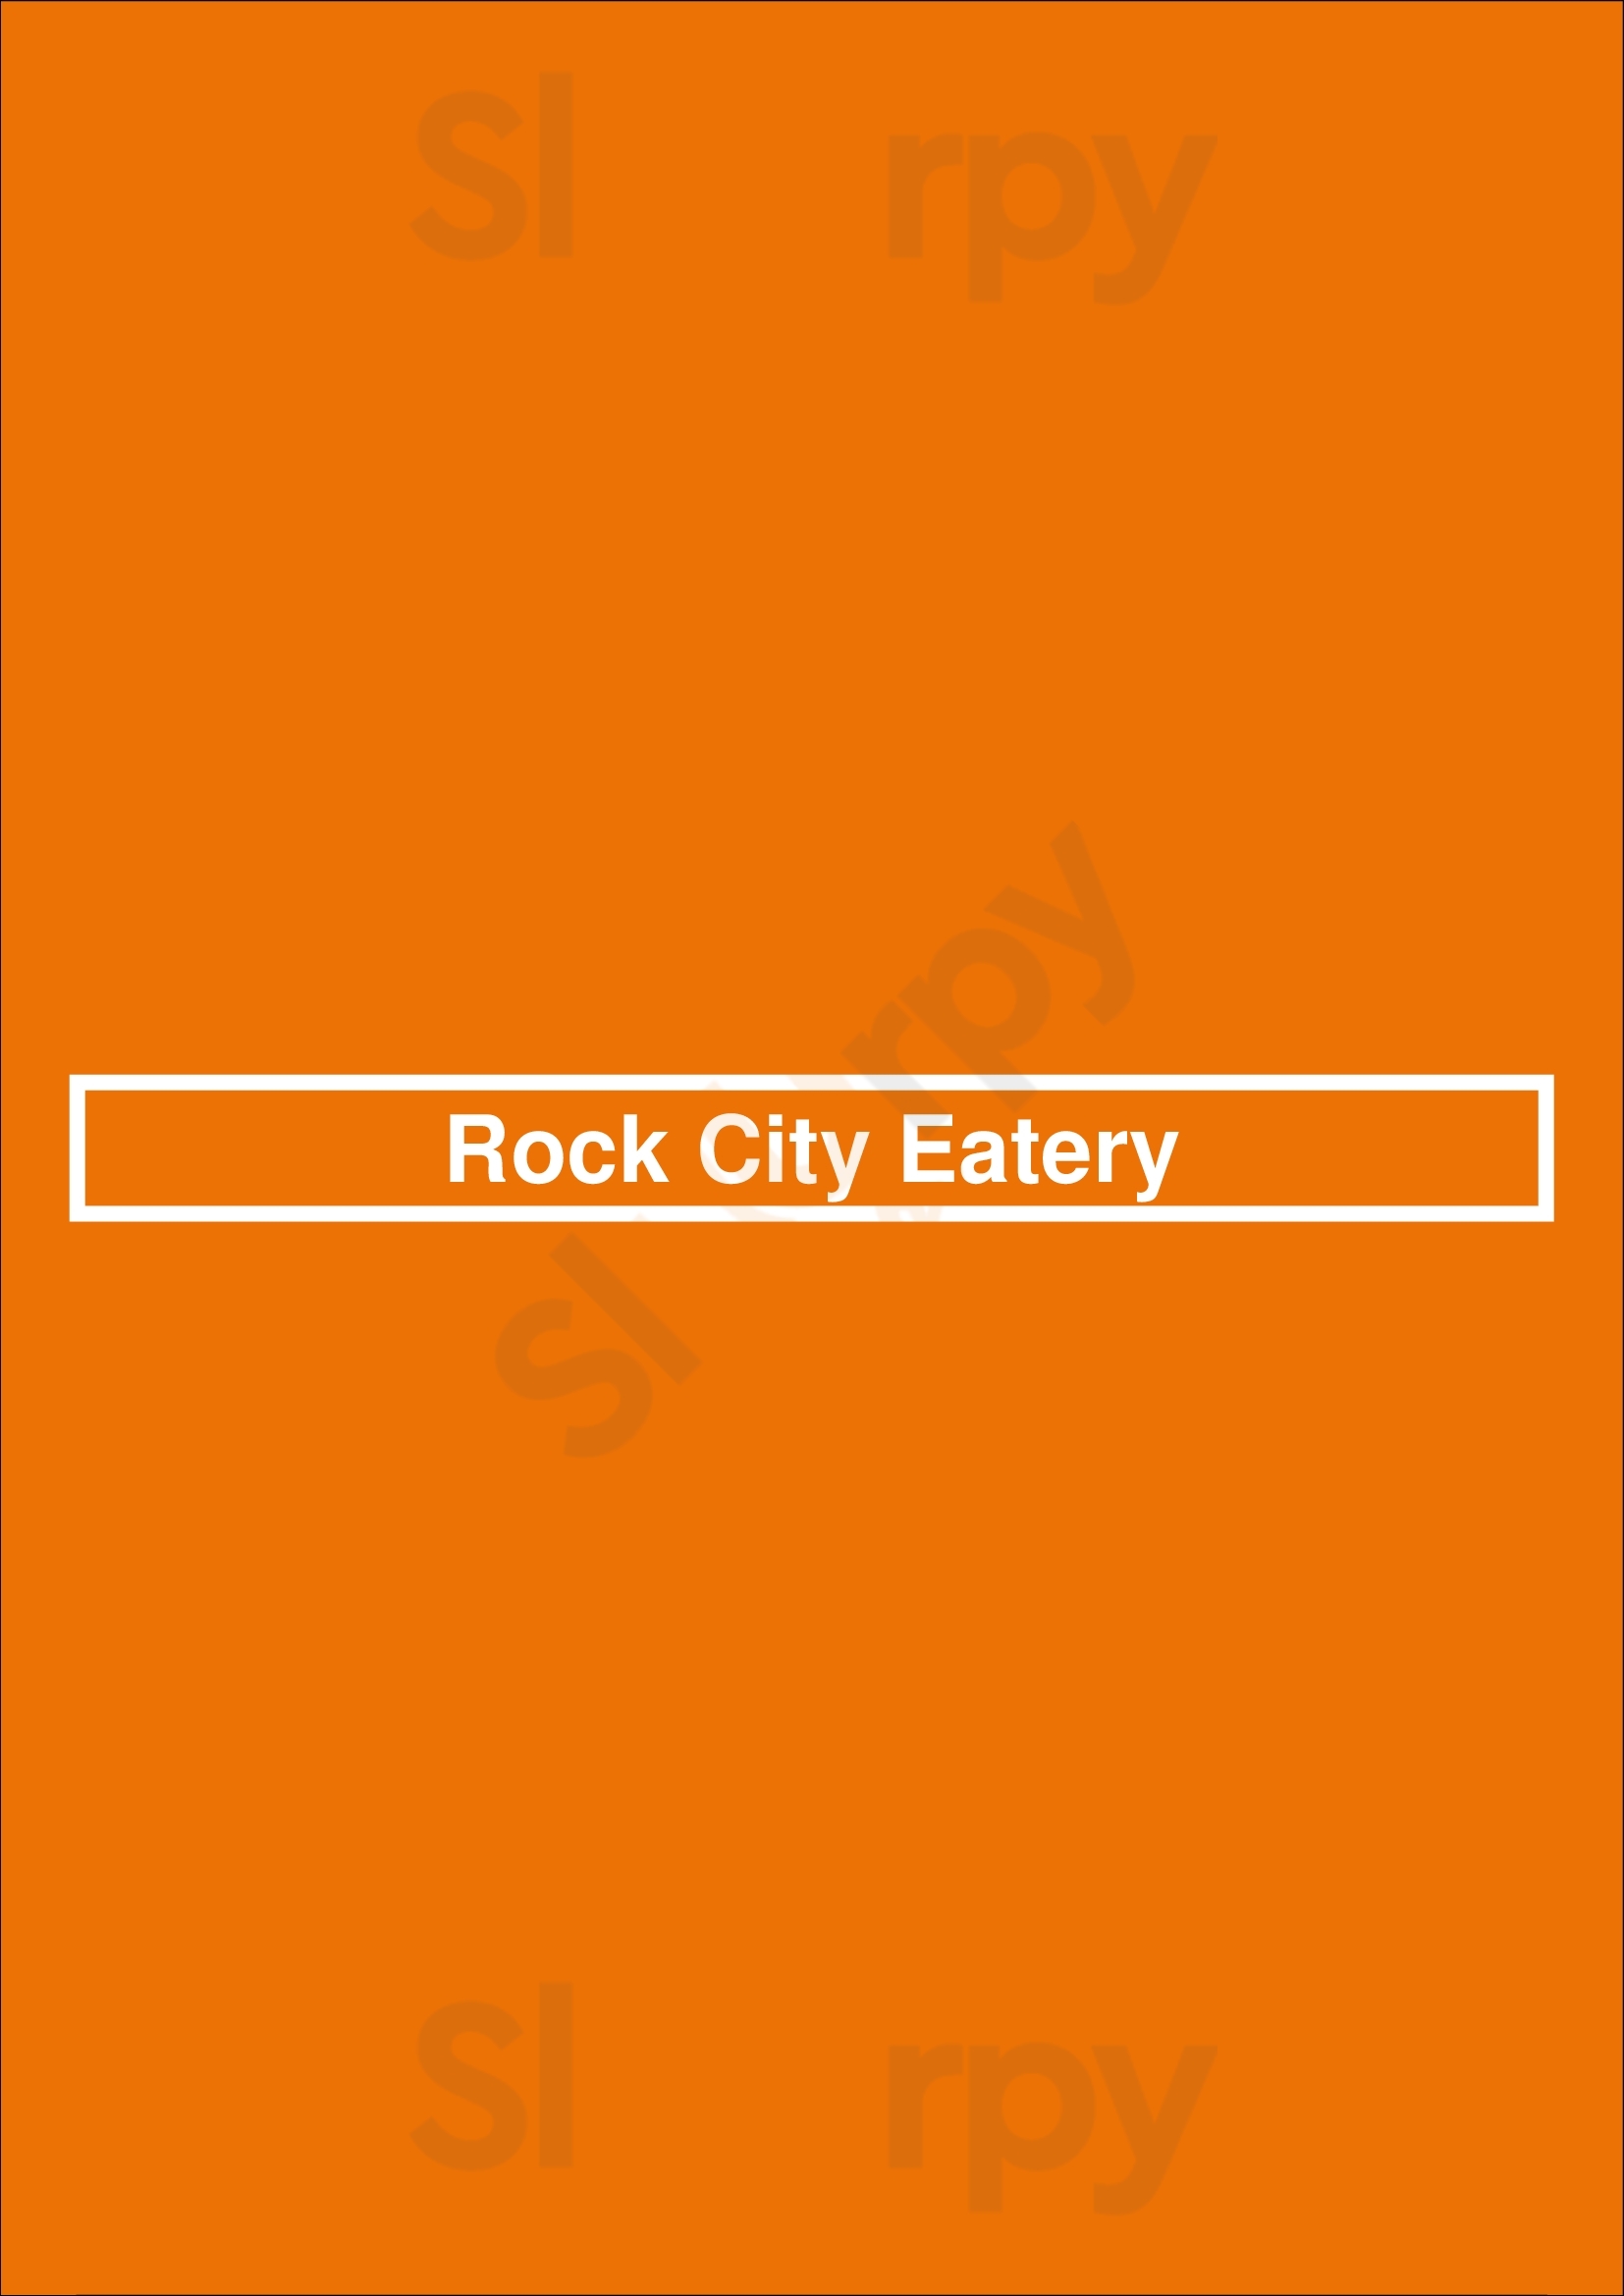 Rock City Eatery Detroit Menu - 1